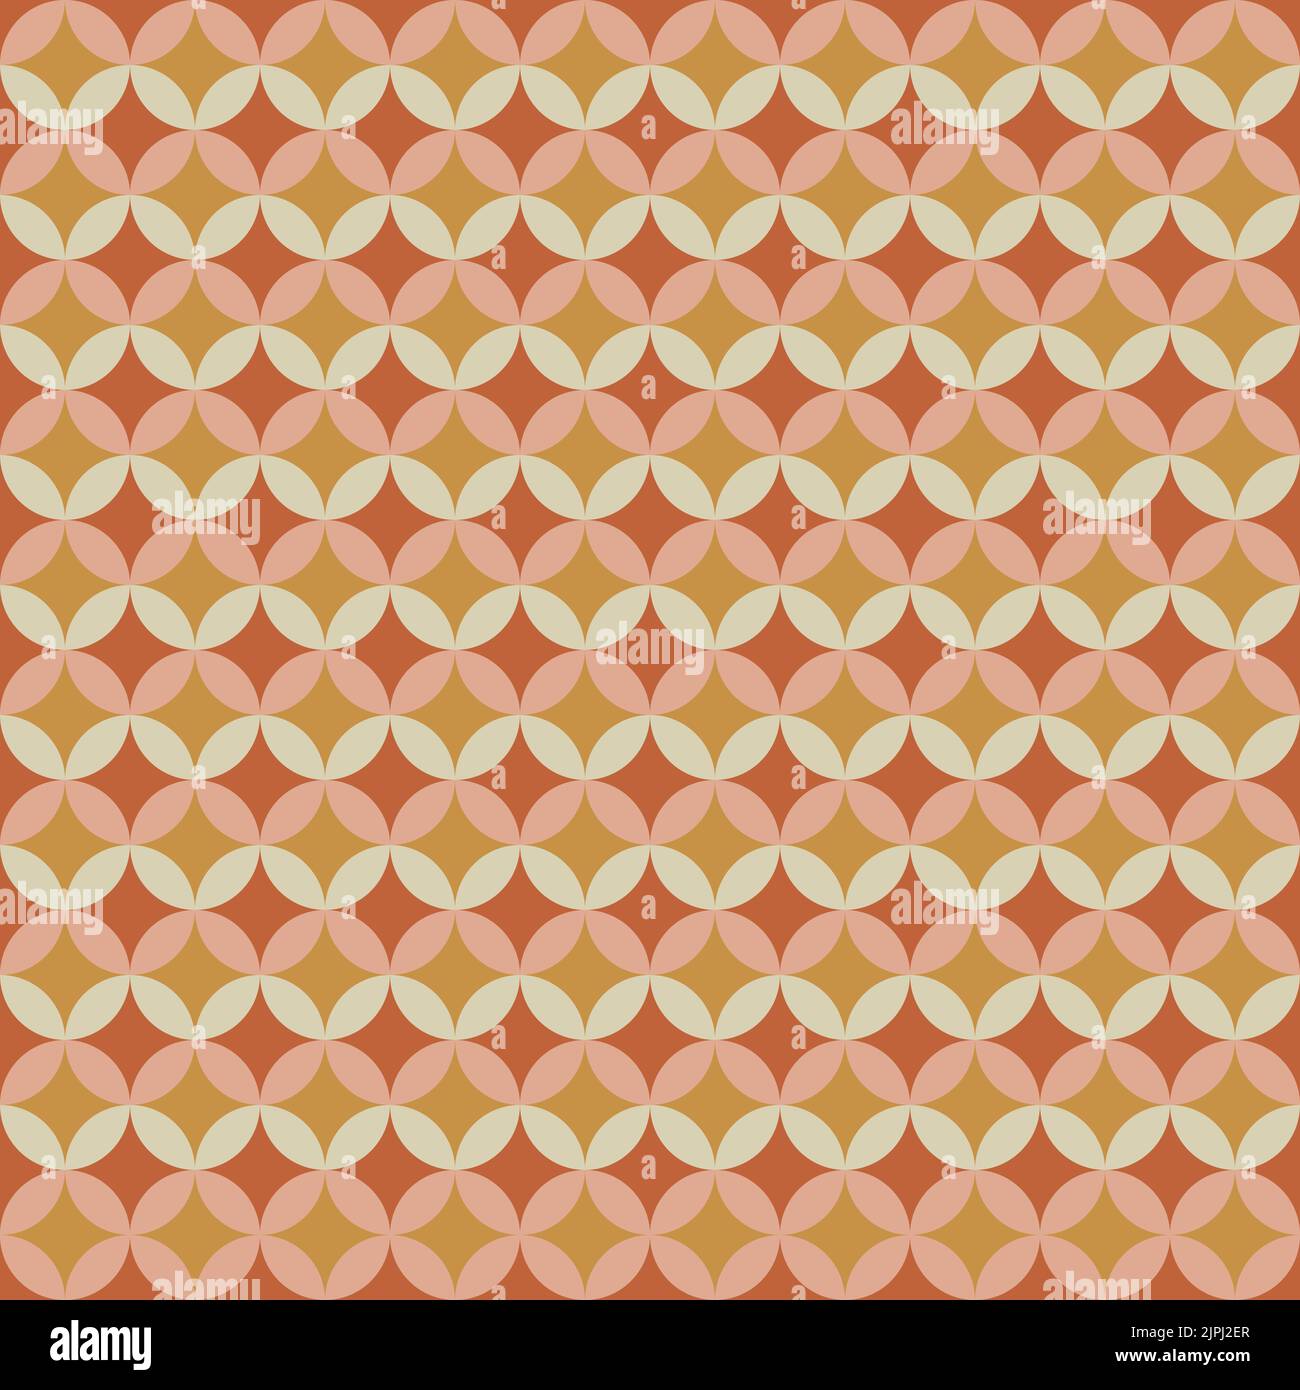 70 s seamless pattern. Retro geometric seamless background in seventies style. Groovy scrapbook paper. Yellow, orange, beige vintage colors vector pat Stock Vector